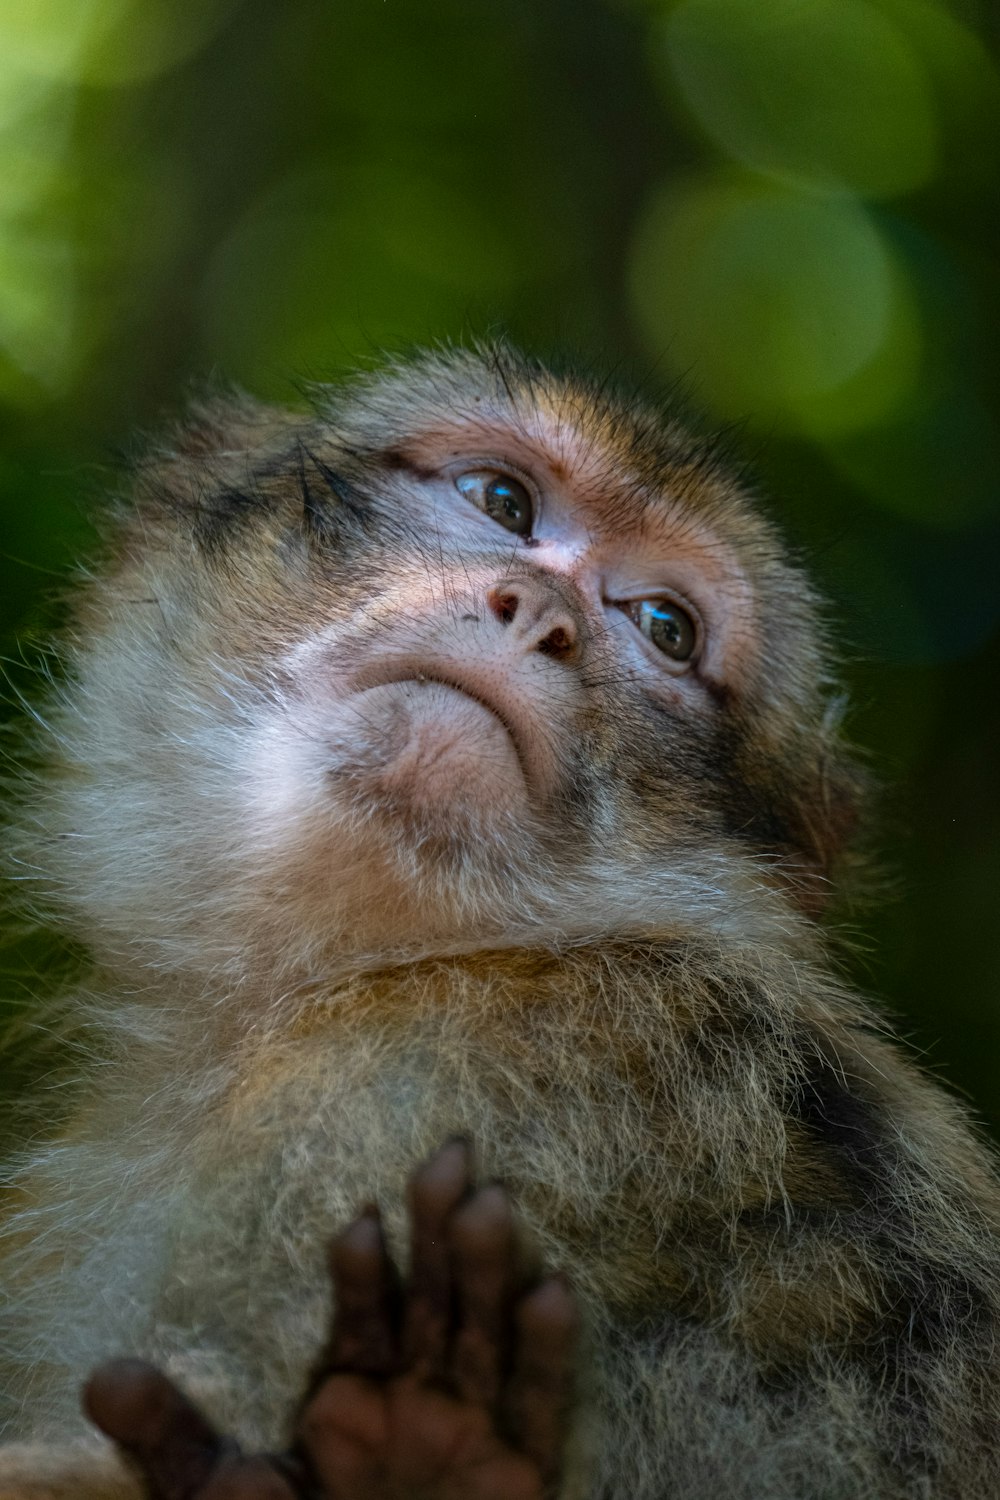 a close up of a monkey